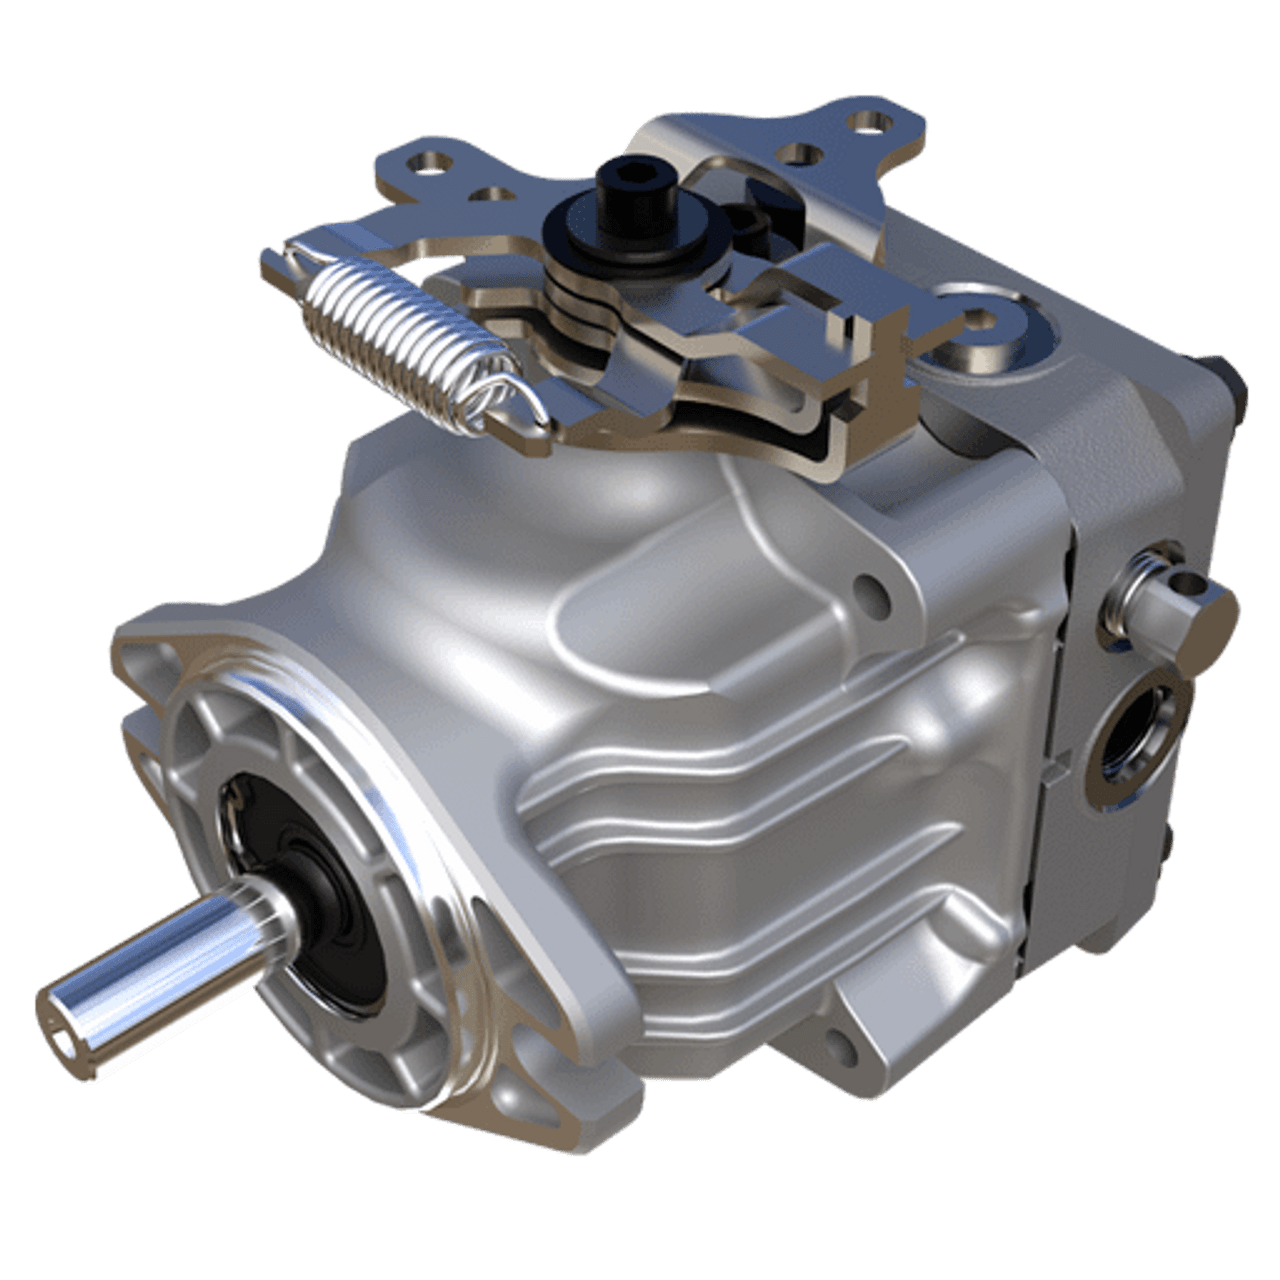 Hydro Gear PL-BGQQ-DY1X-XXXX Hydraulic Pump PR Series | Original OEM Part | Free Shipping - LawnMowerPartsWorld.com